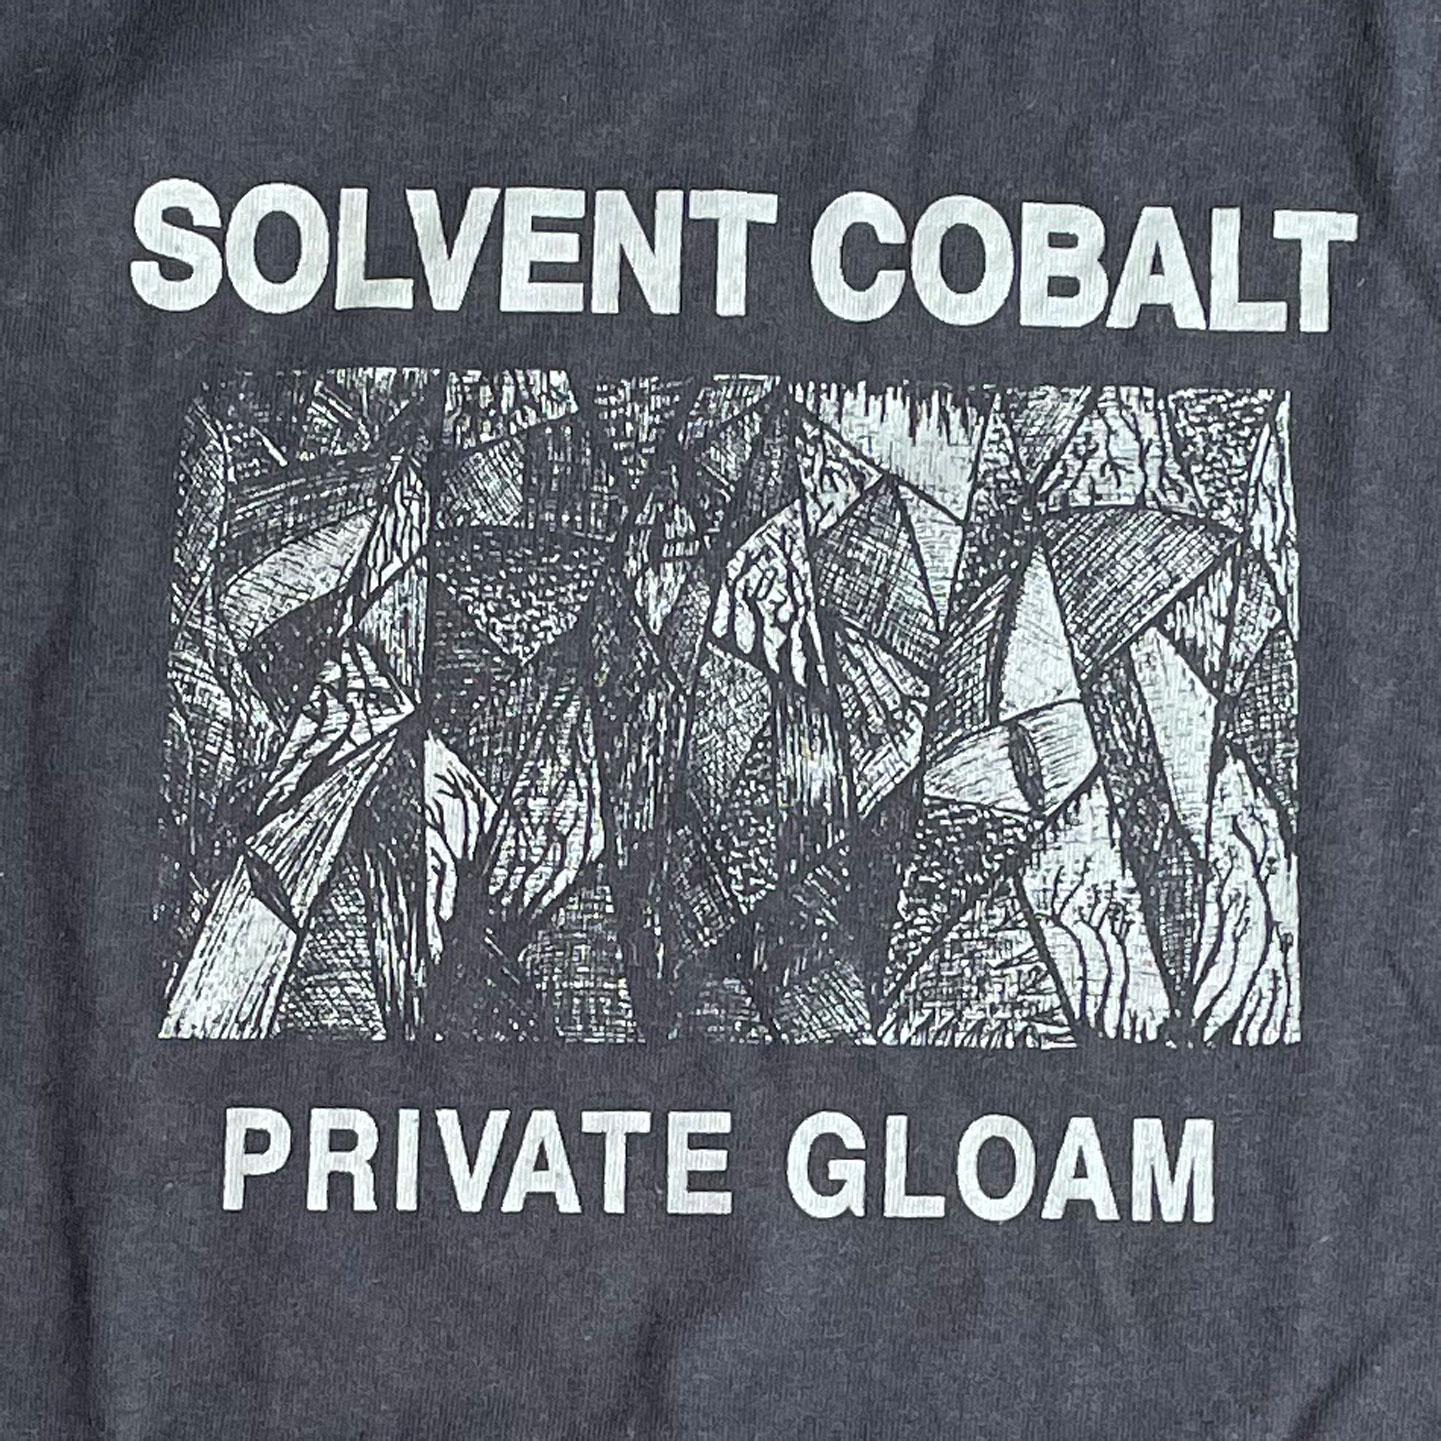 SOLVENT COBALT Tシャツ PRIVATE GLOAM